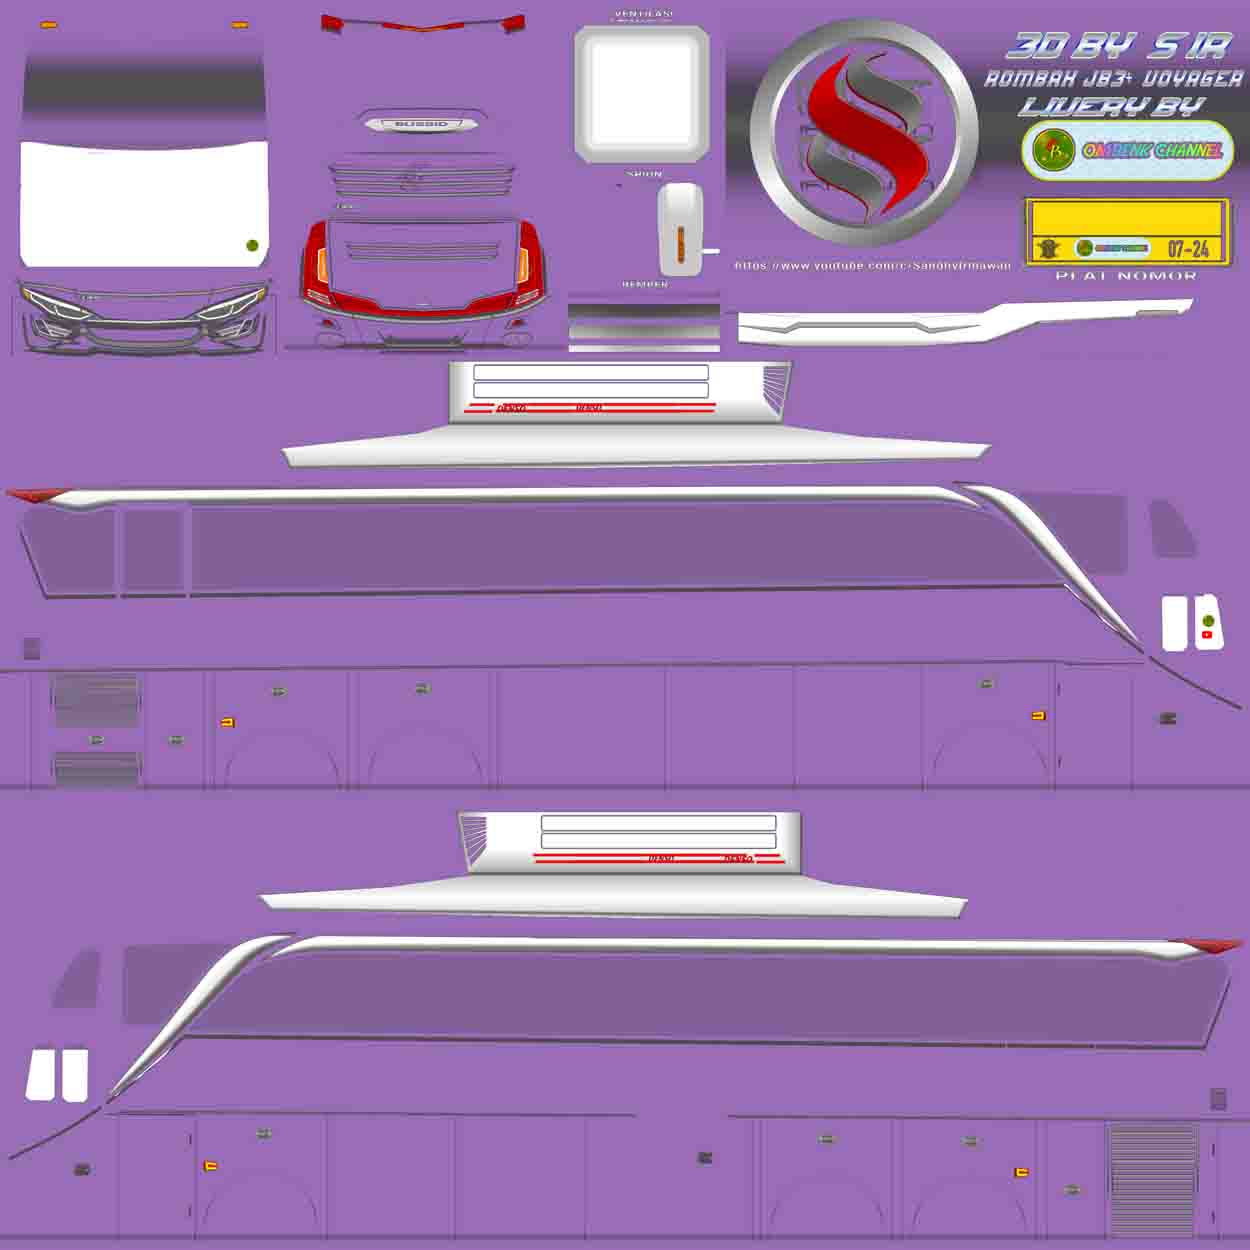 livery bussid warna ungu